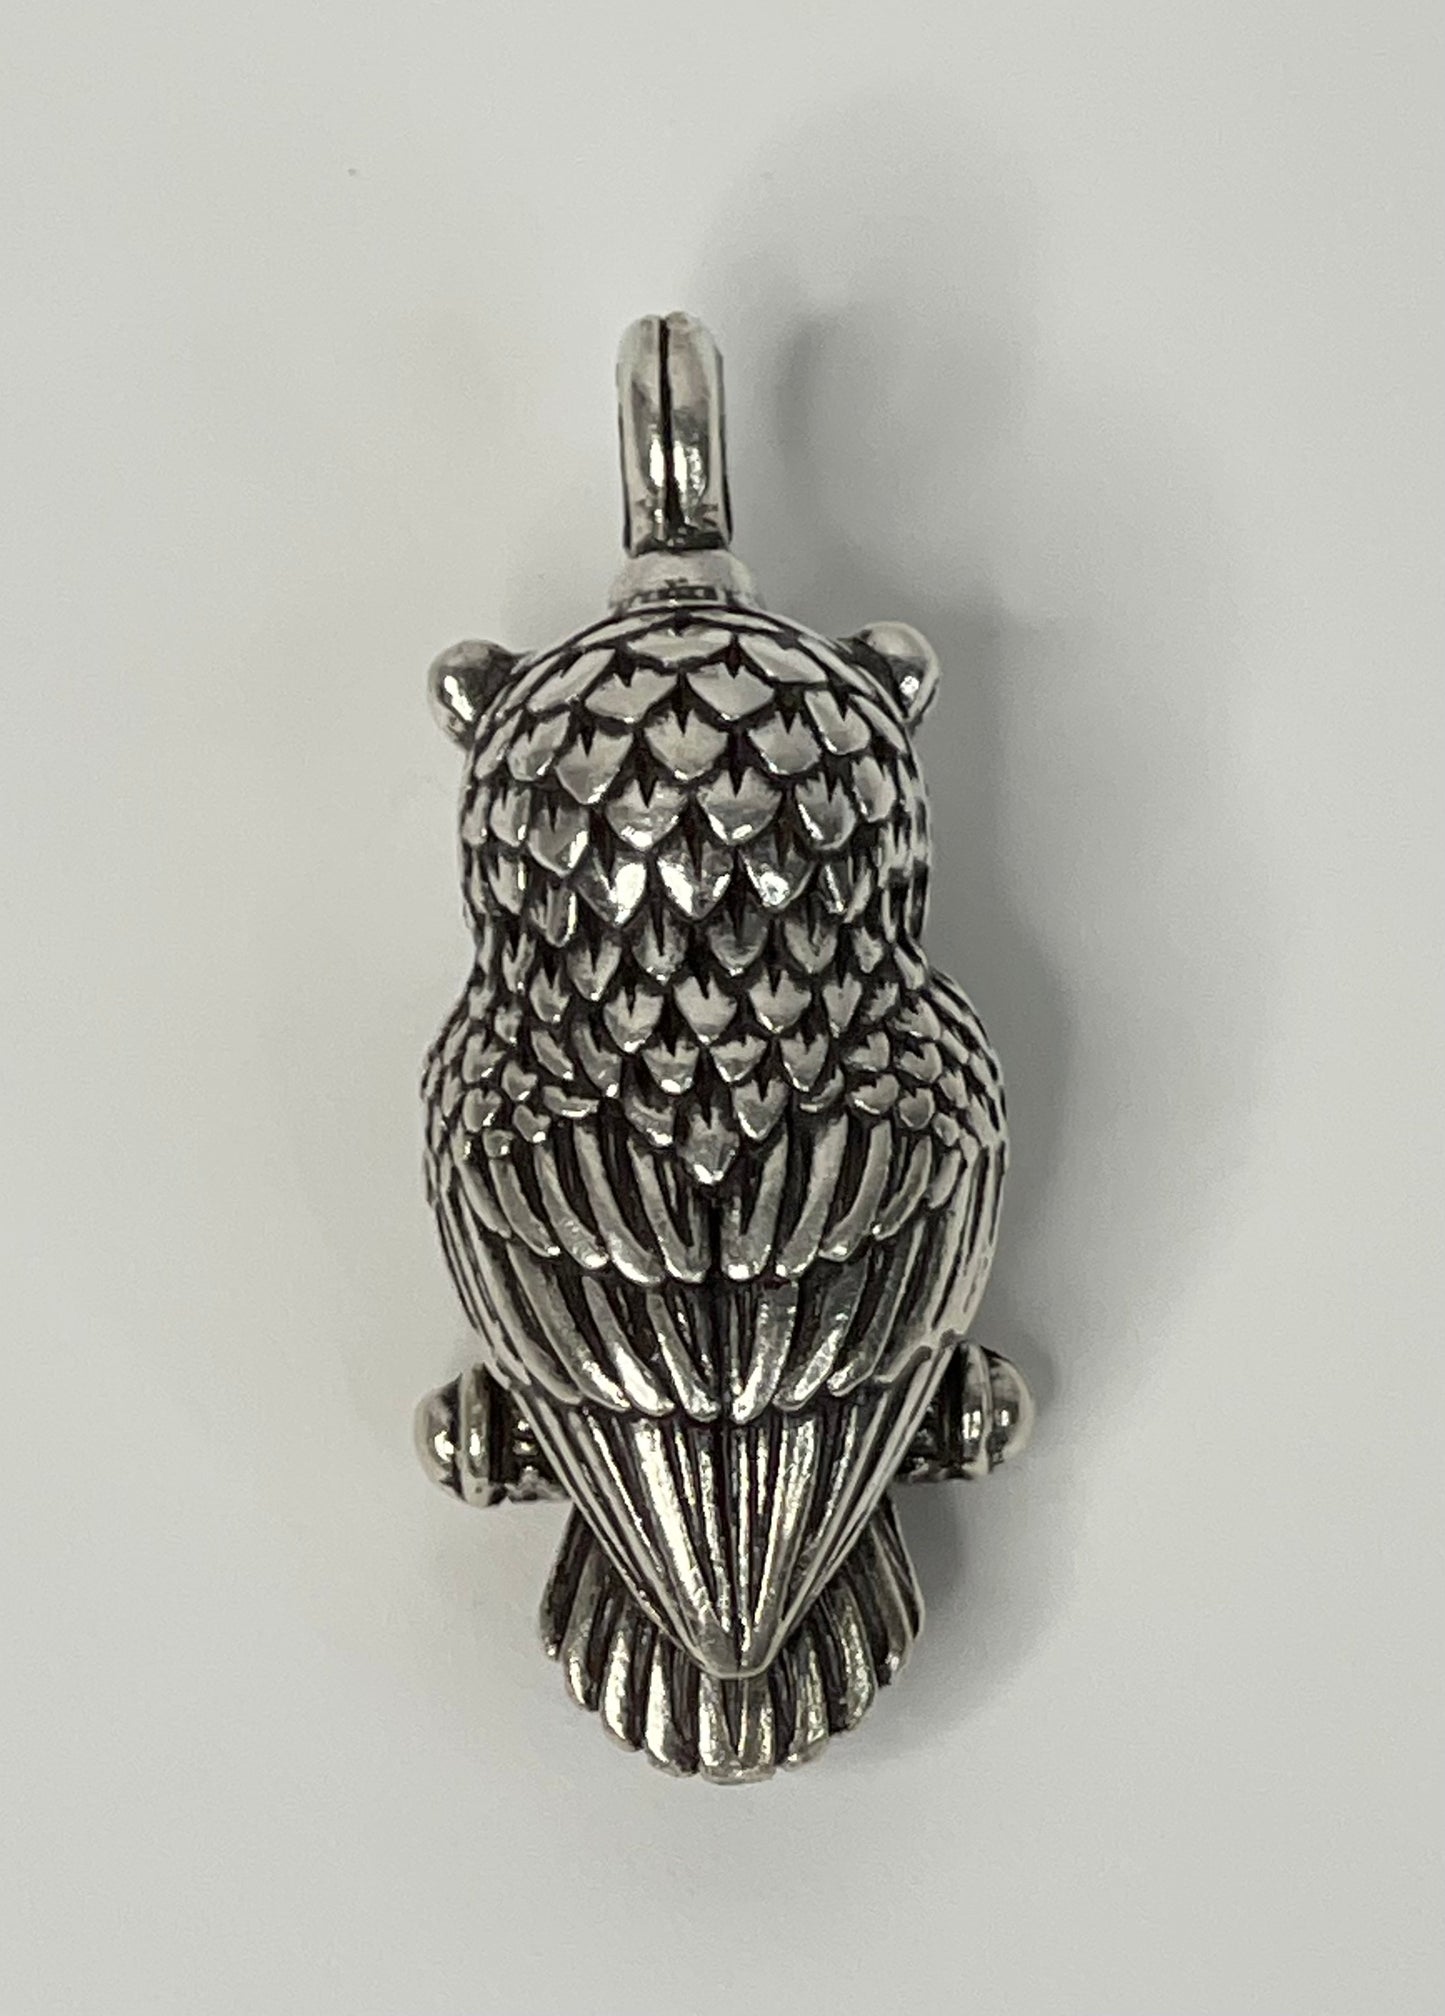 Metal Rhinestone Owl Pendant